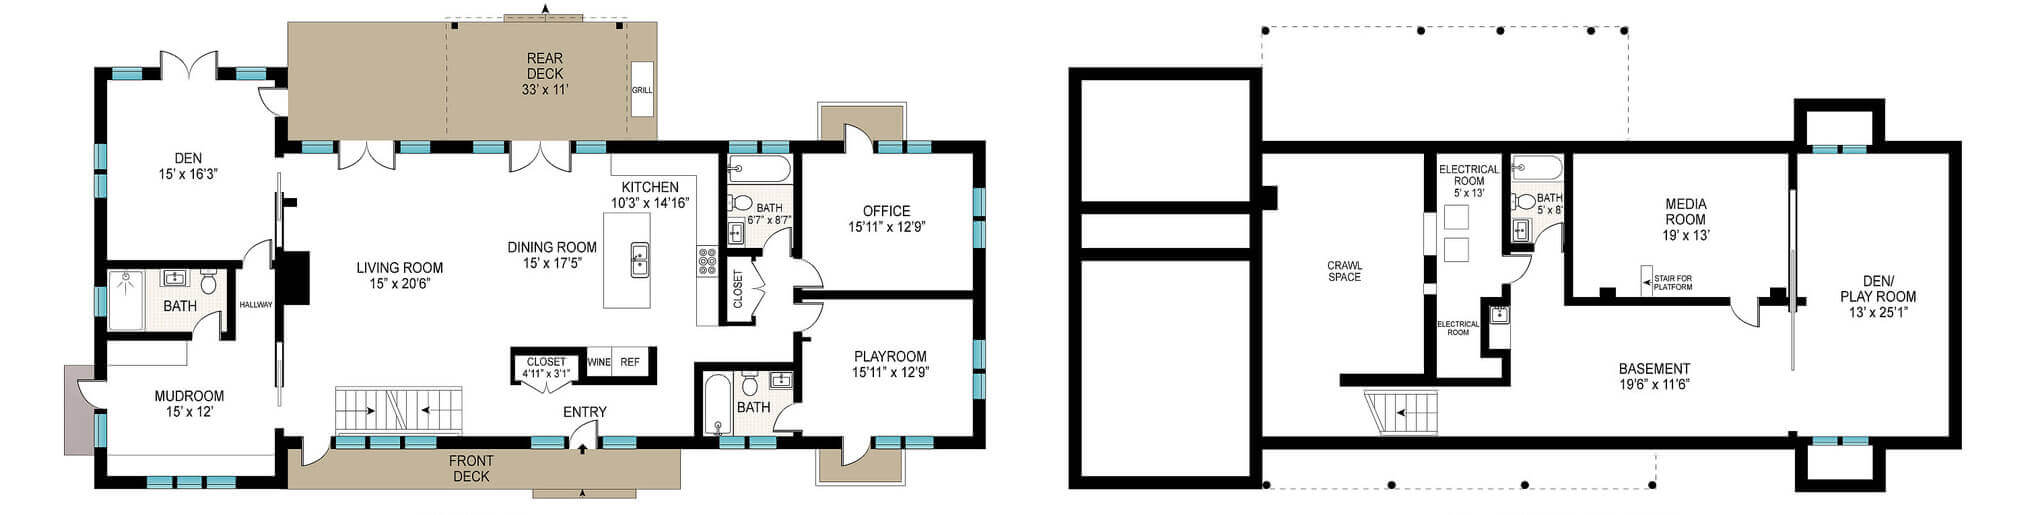 Floor Plan  Drafting  Services  Residential Drafting  